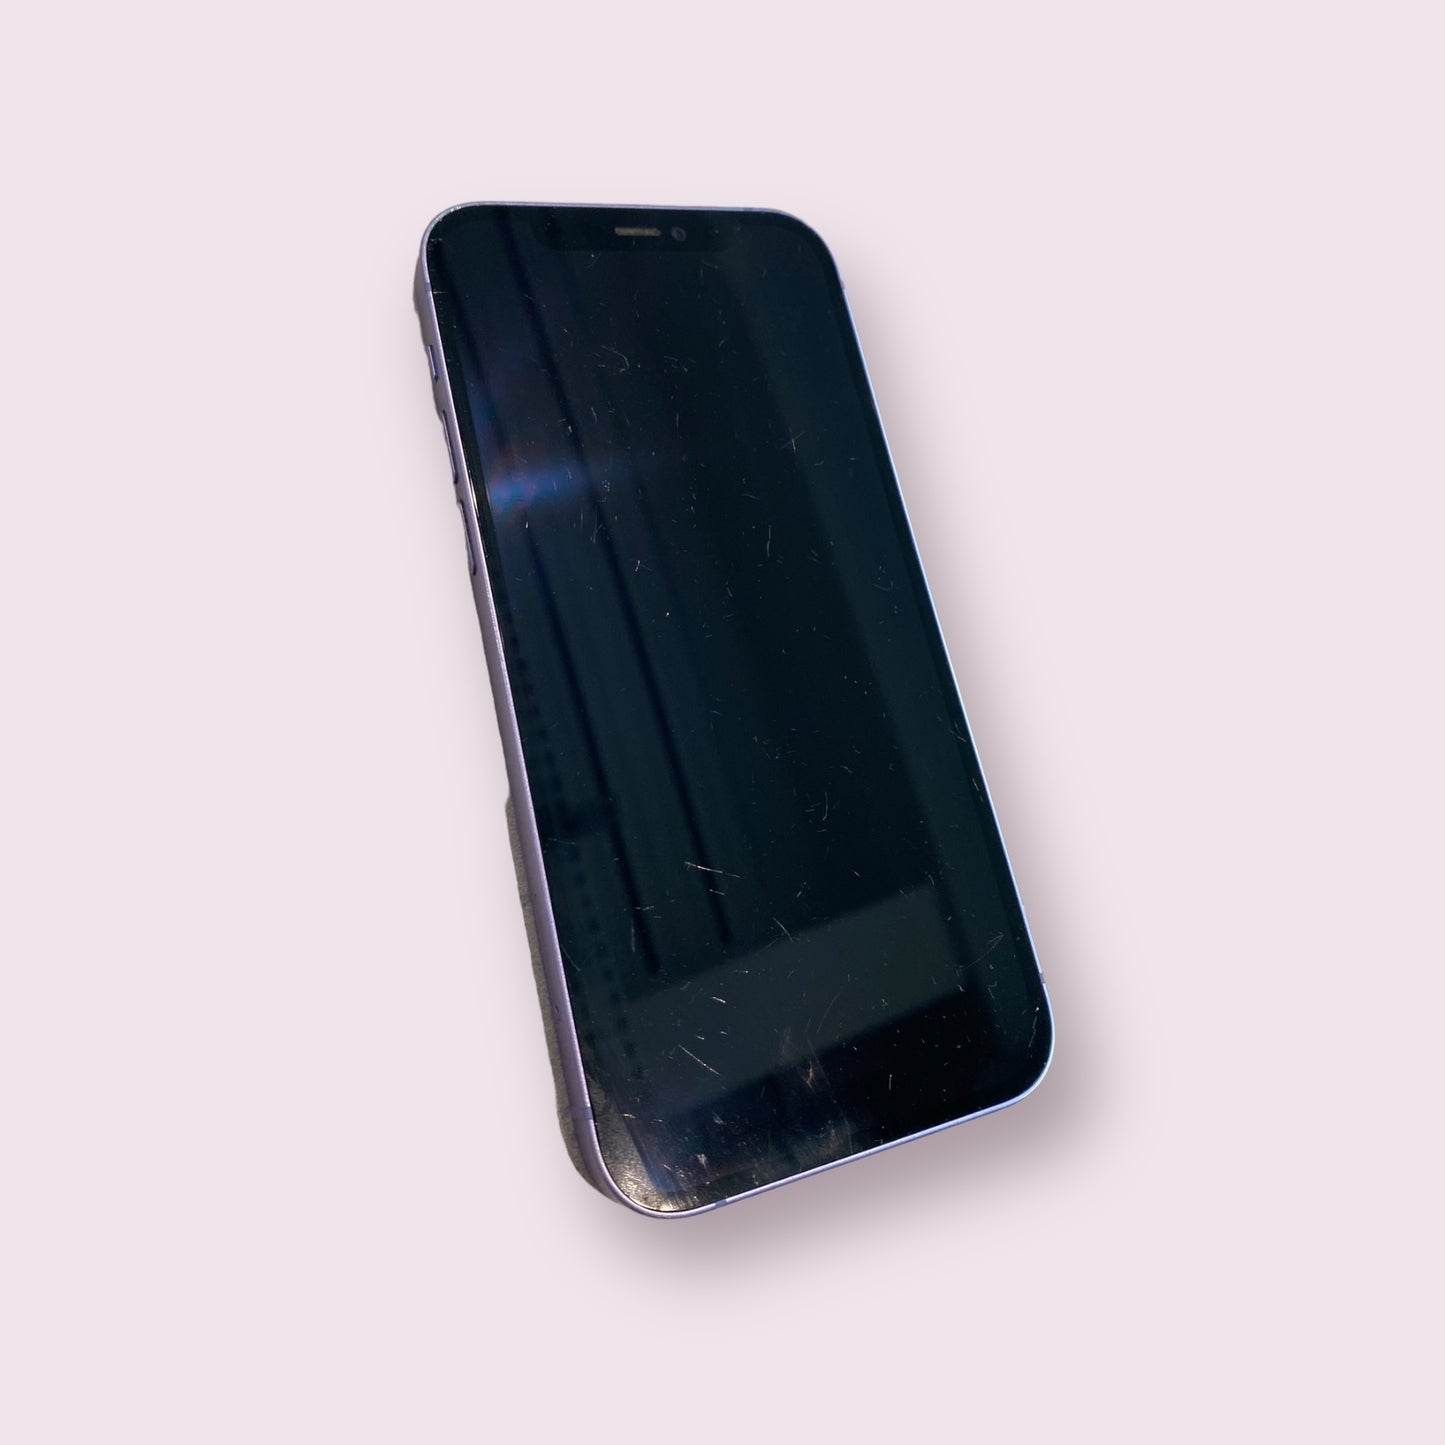 Apple iPhone 12 64GB Lavender - Unlocked - Grade B - NEW BATTERY